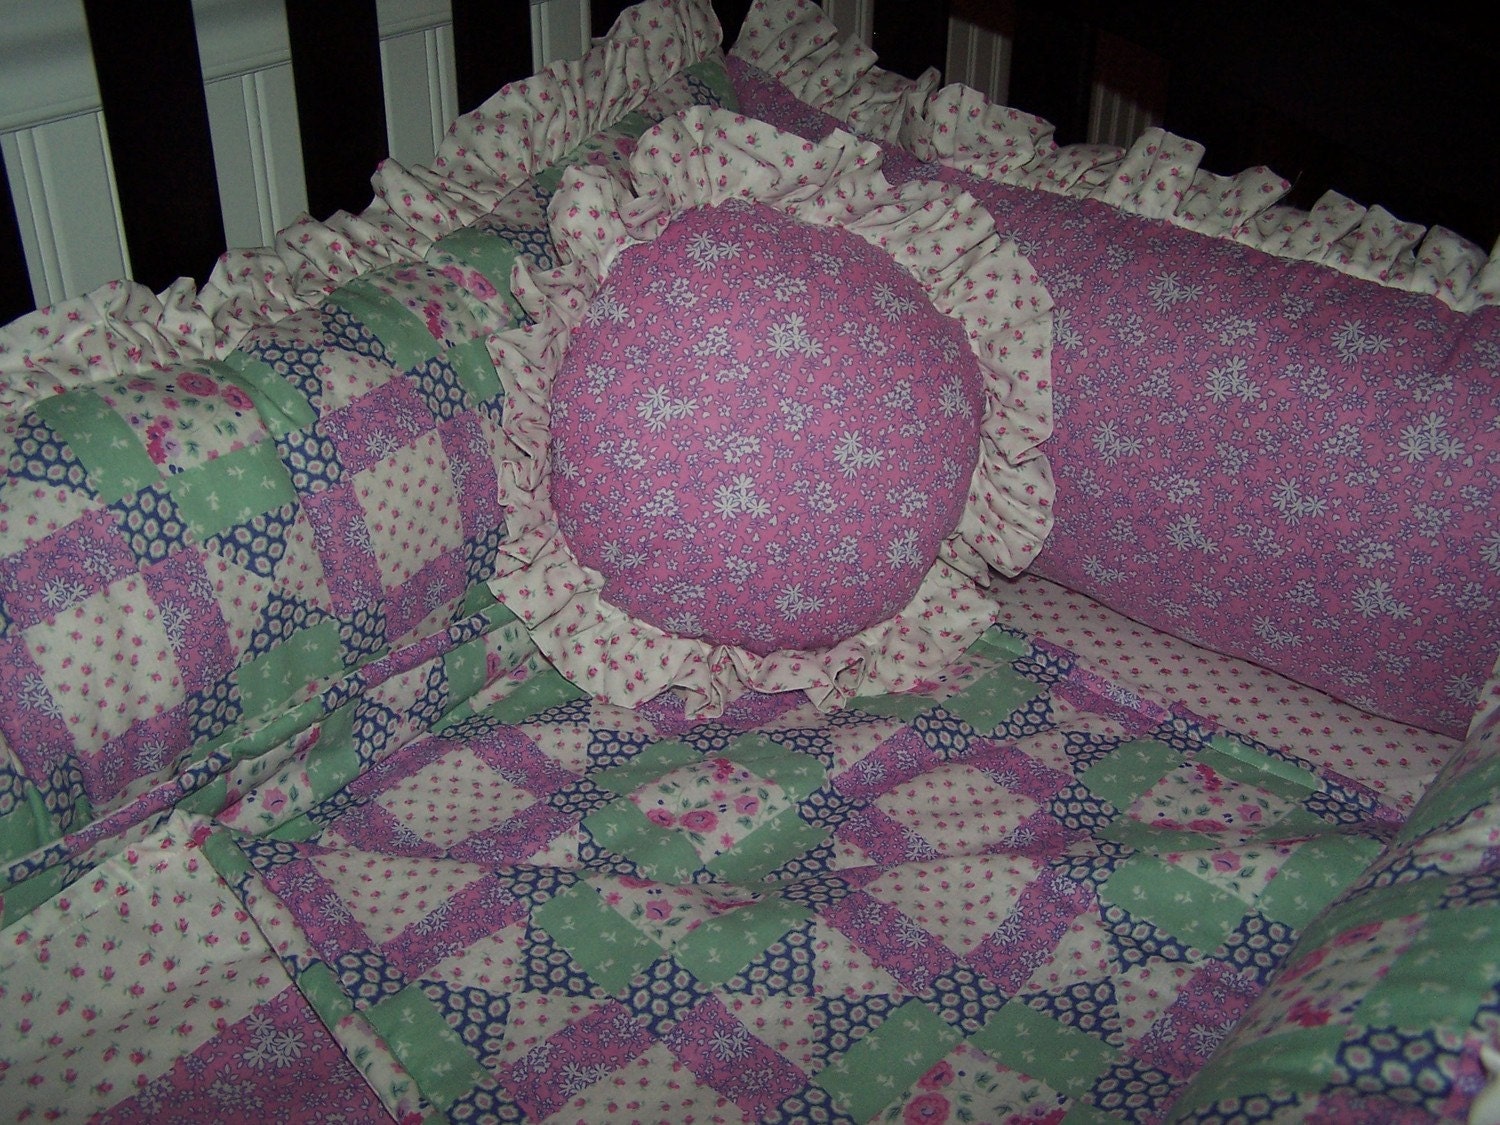 Amazon.com: Kwik Sew Crib Comforter Skirt Fitted Sheet Bumper Pad